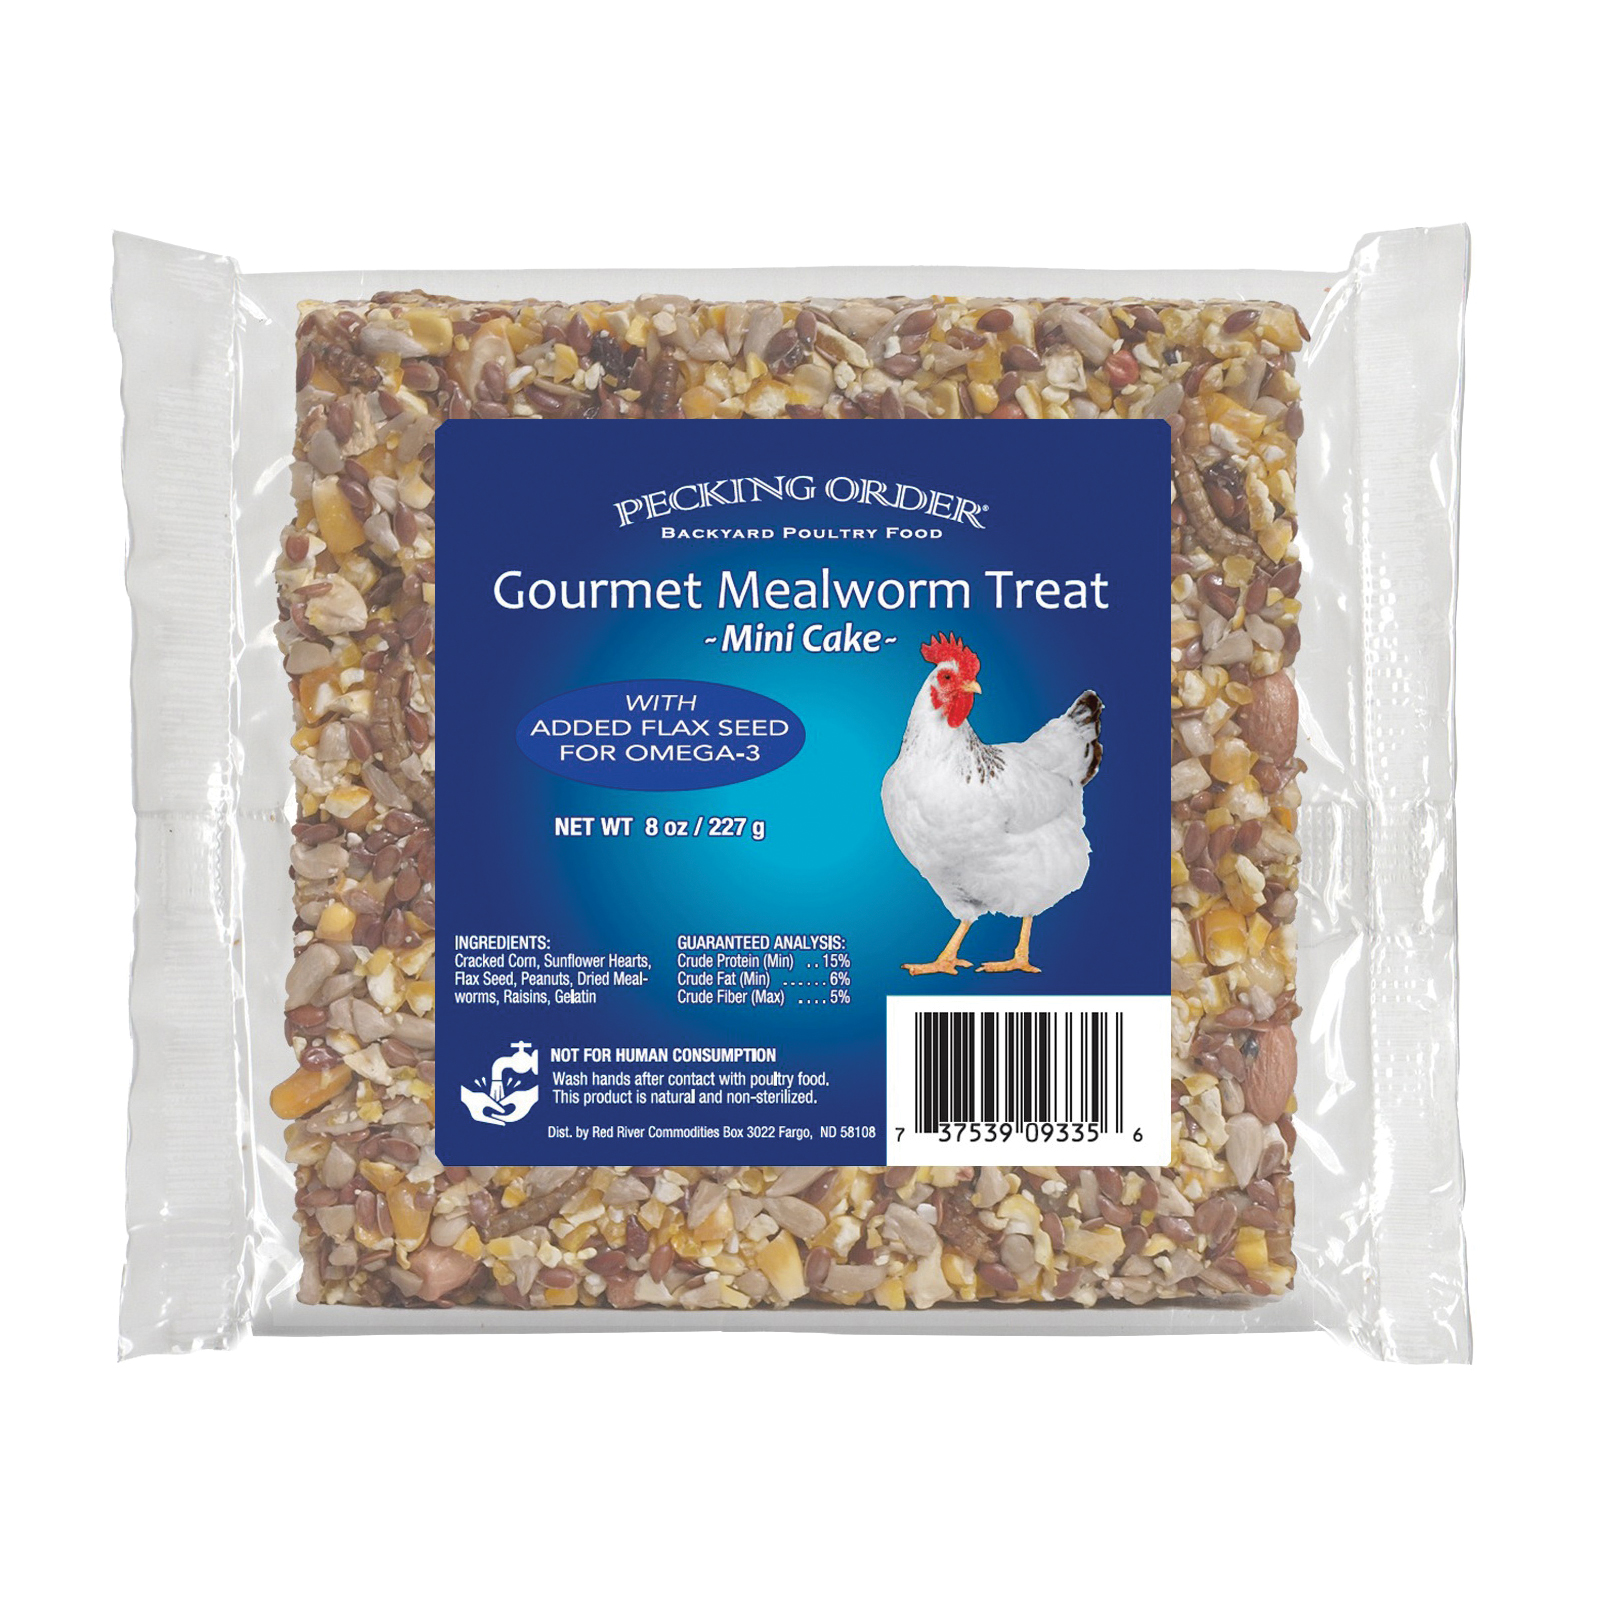 Pecking Order 009327 Chicken Mealworm Treat, 8 lb Bag - 1